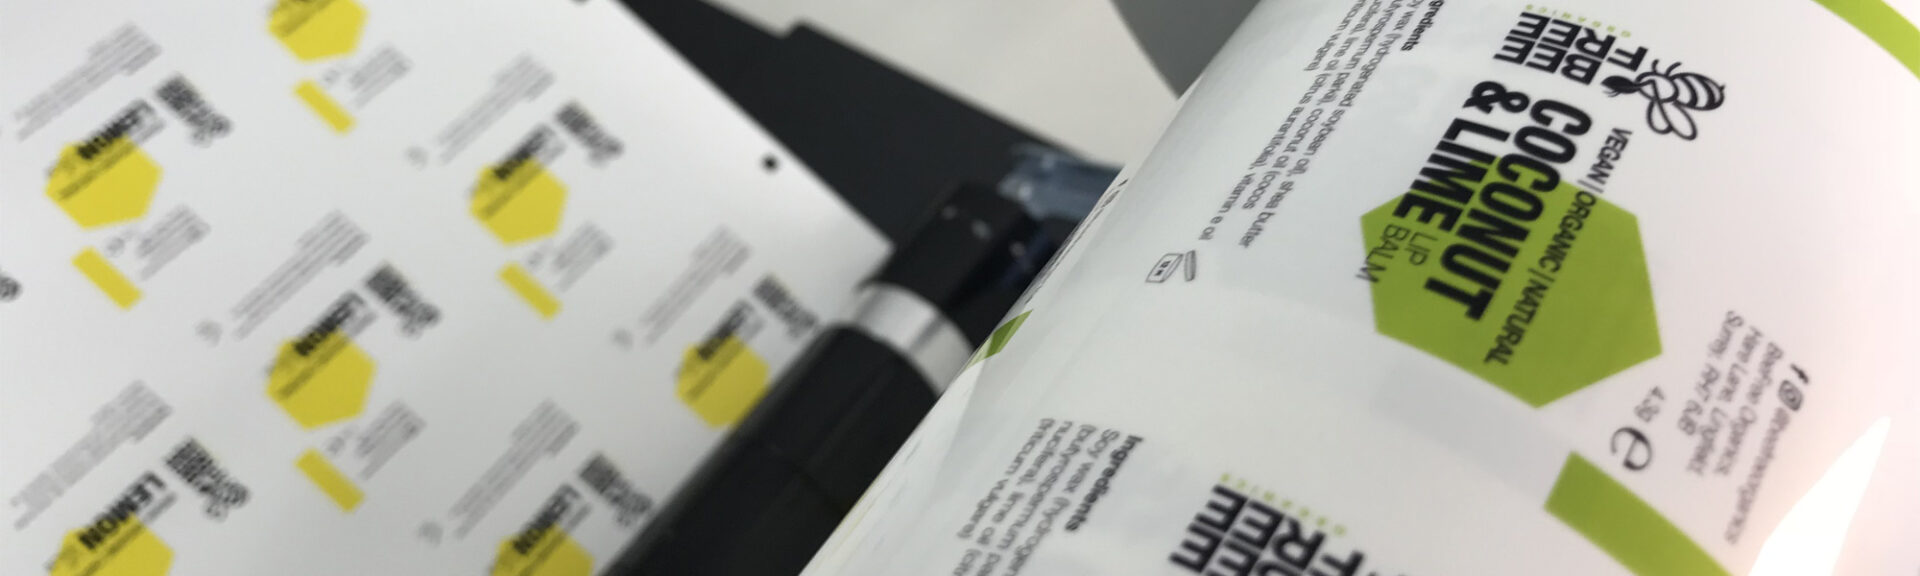 Pantone Custom Retail Labels Permanent CMYK Clear Printable Sticker Paper